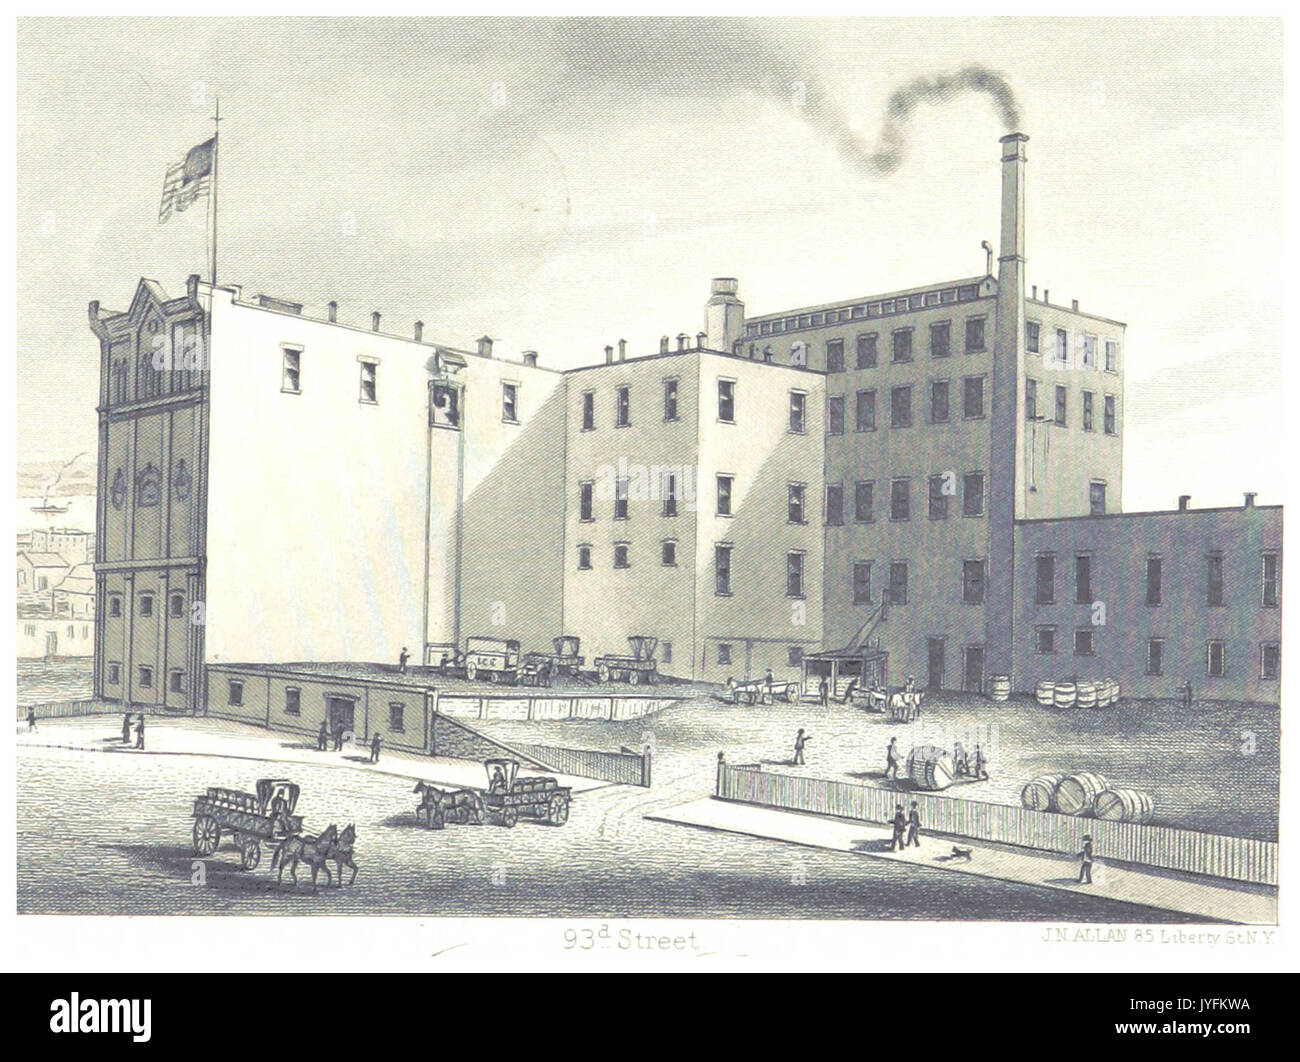 De Lossing" (1876) p169 GEORGE EHRETS Pilsener Bier Brauerei, NEW YORK CITY (2) 93 d STREET Stockfoto